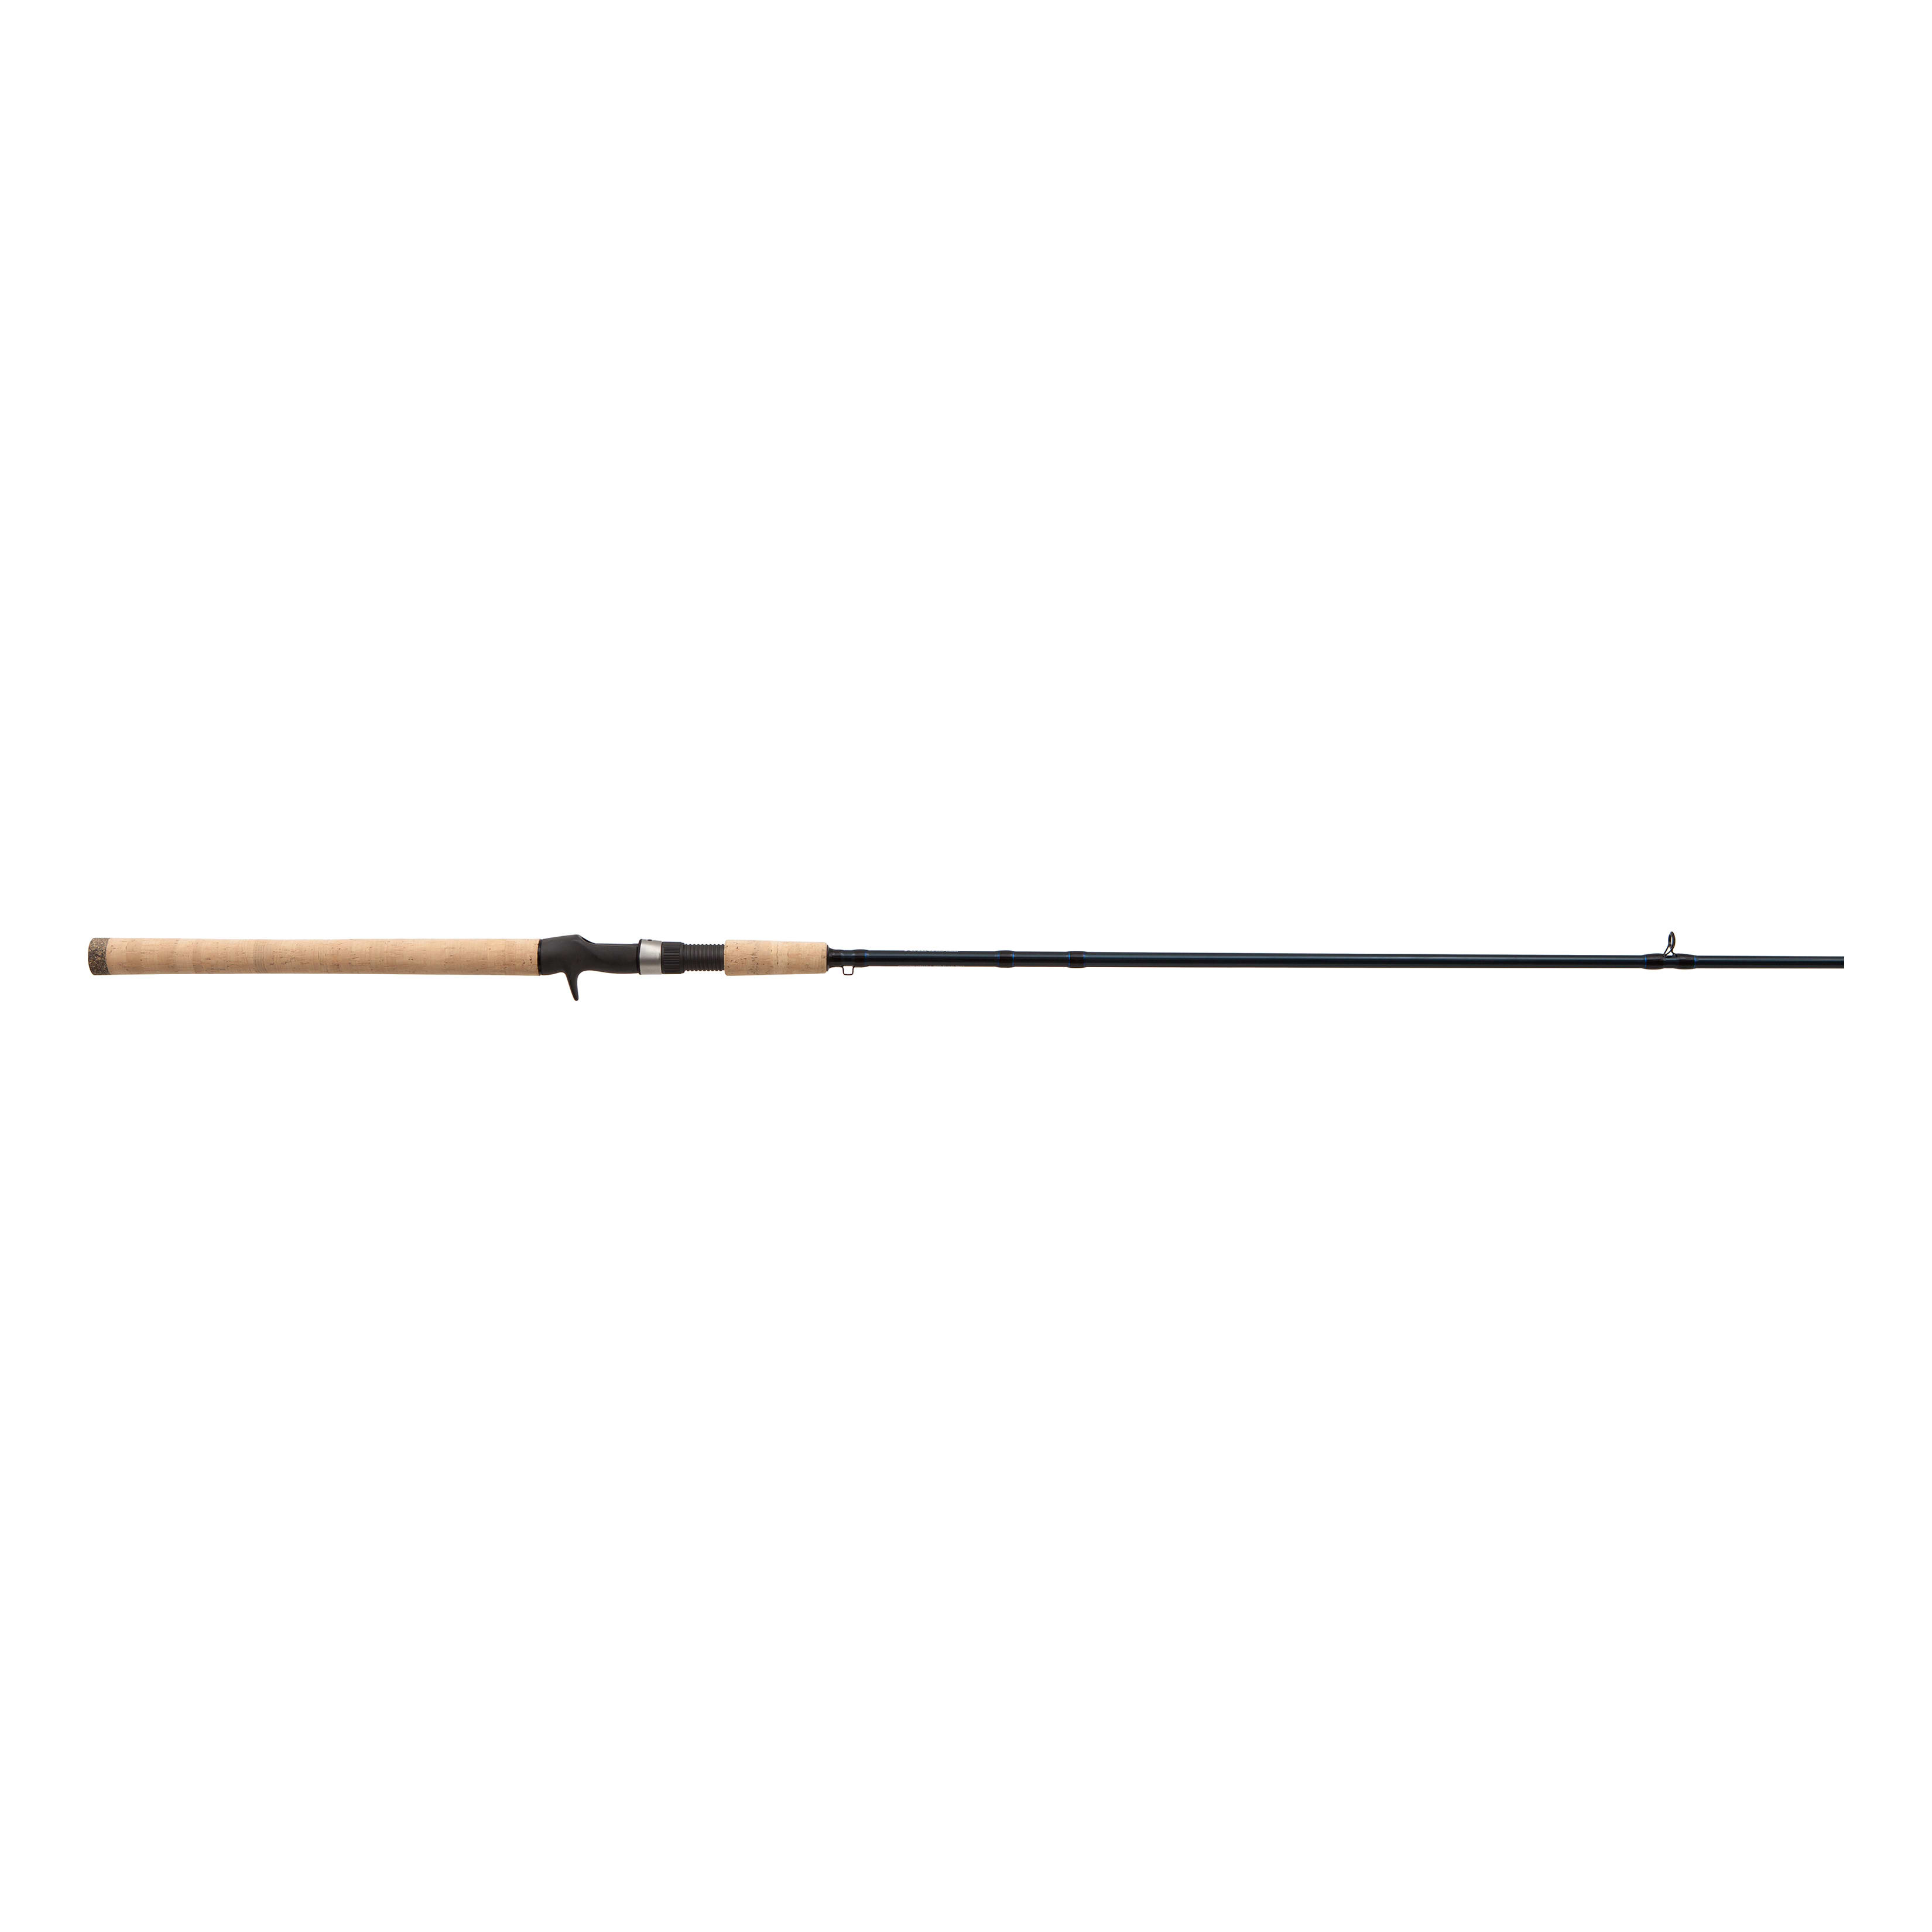 Amundson TMX Trend Moocher X downrigging fishing rod. Test and